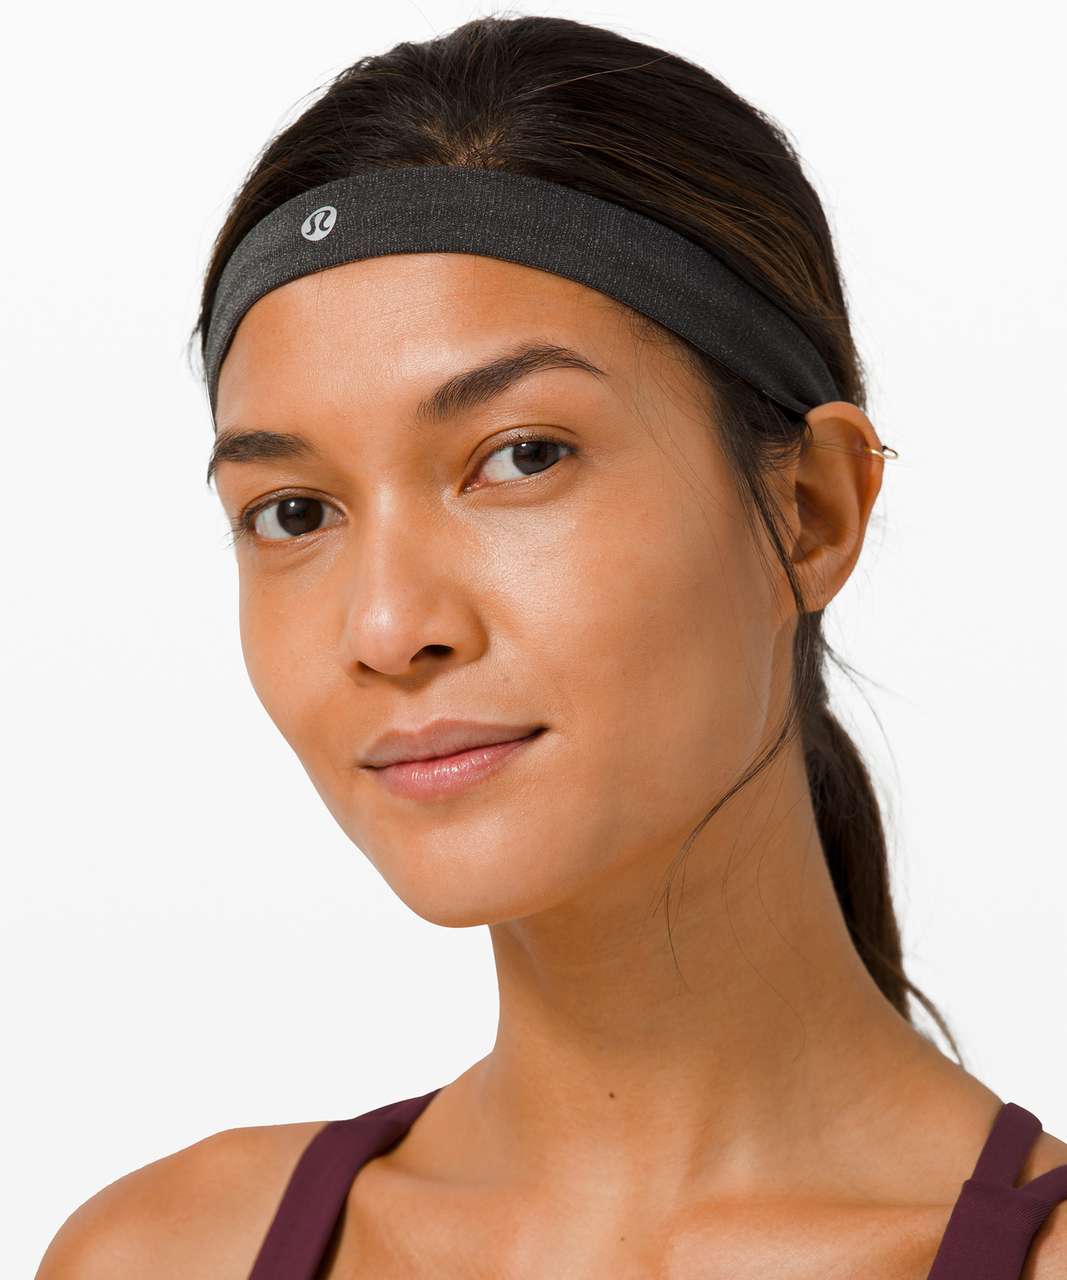 Lululemon Cardio Cross Trainer Headband - Graphite Grey / Vapor